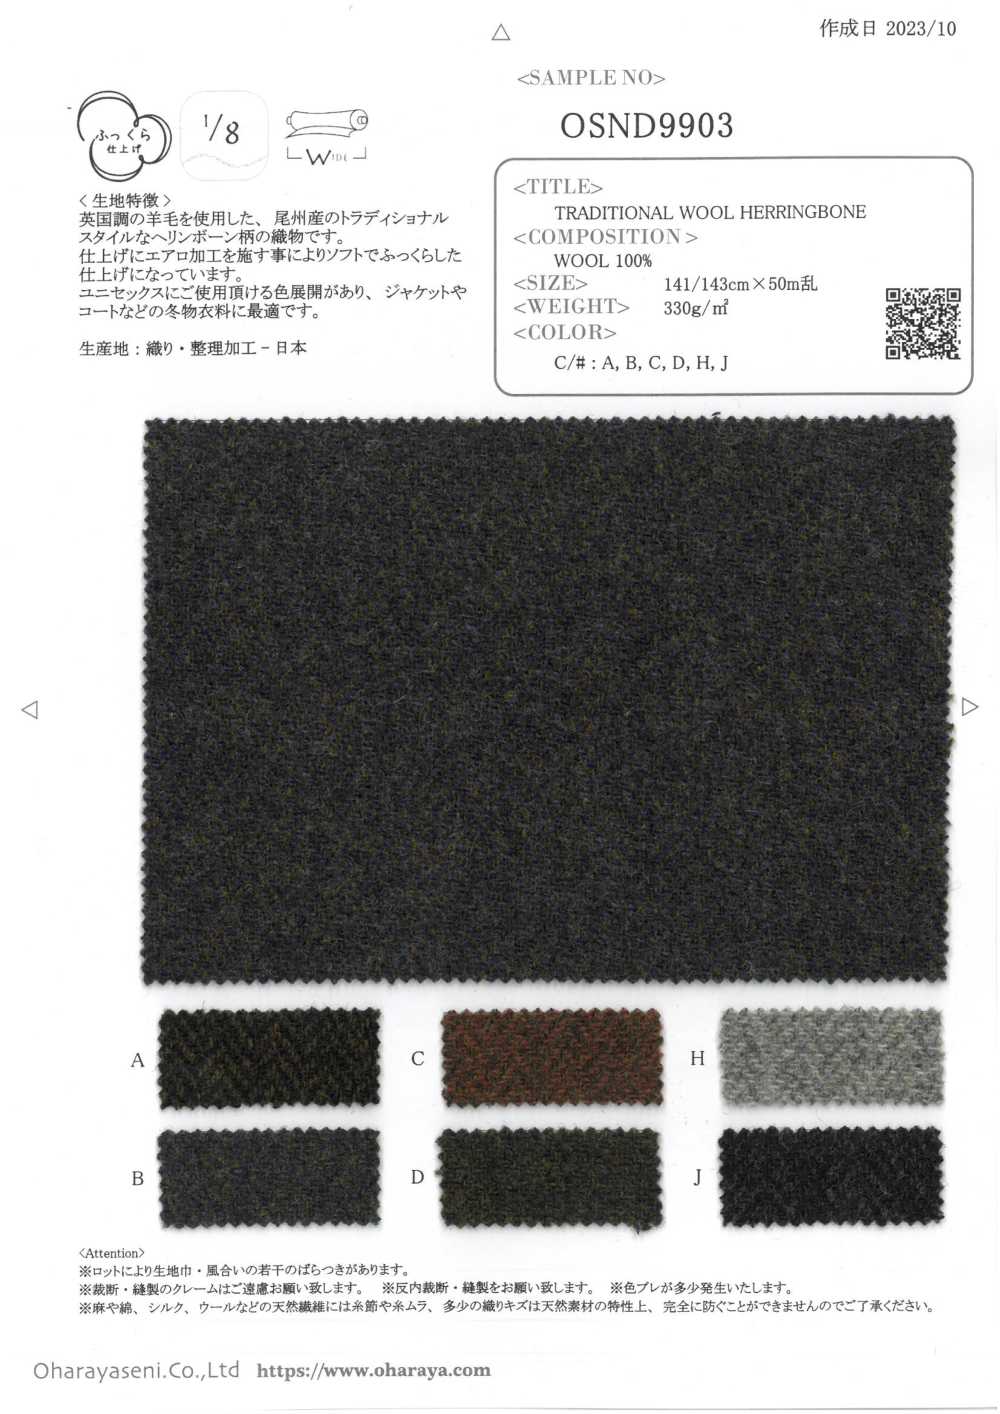 OSND9903 TRADITIONAL WOOL HERRINGBONE[Textile / Fabric] Oharayaseni